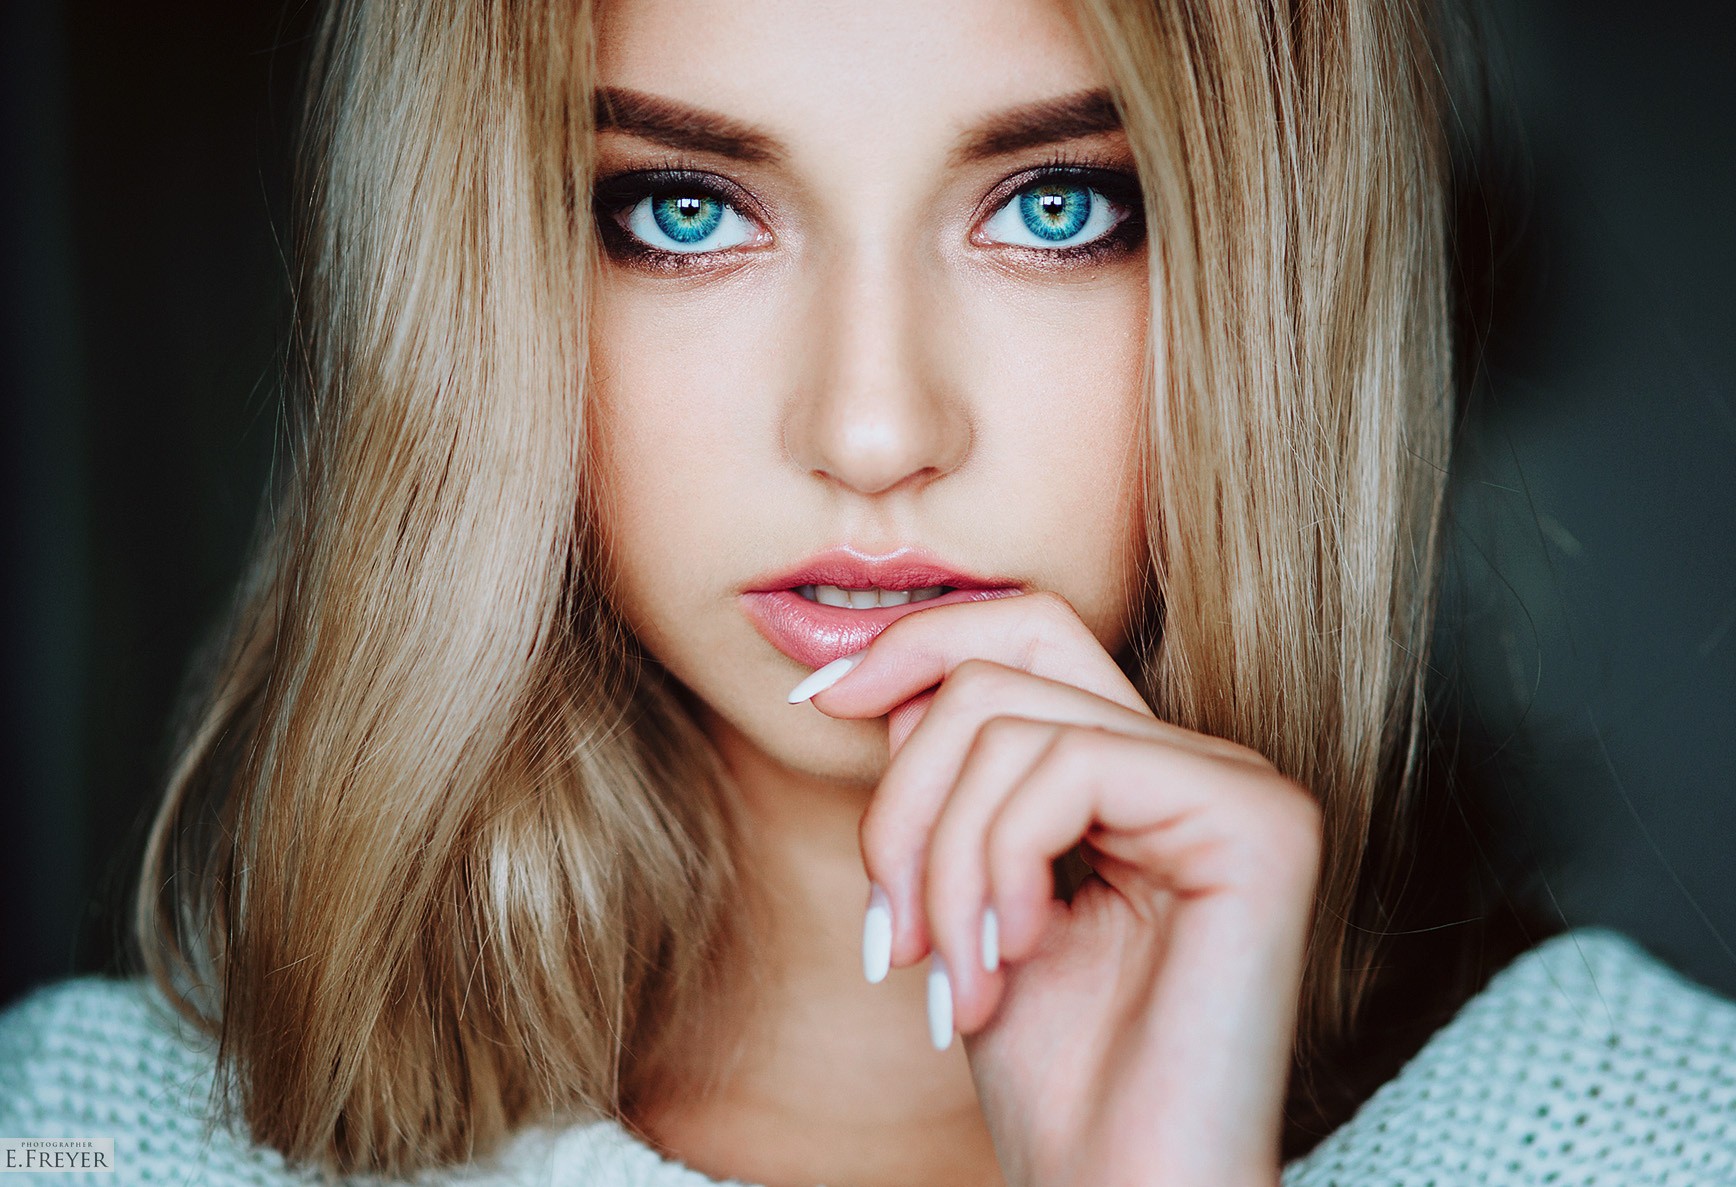 Women Blonde Face Blue Eyes Portrait Closeup Smoky Eyes Evgeny Freyer Polina Kostyuk Looking At View 1736x1187